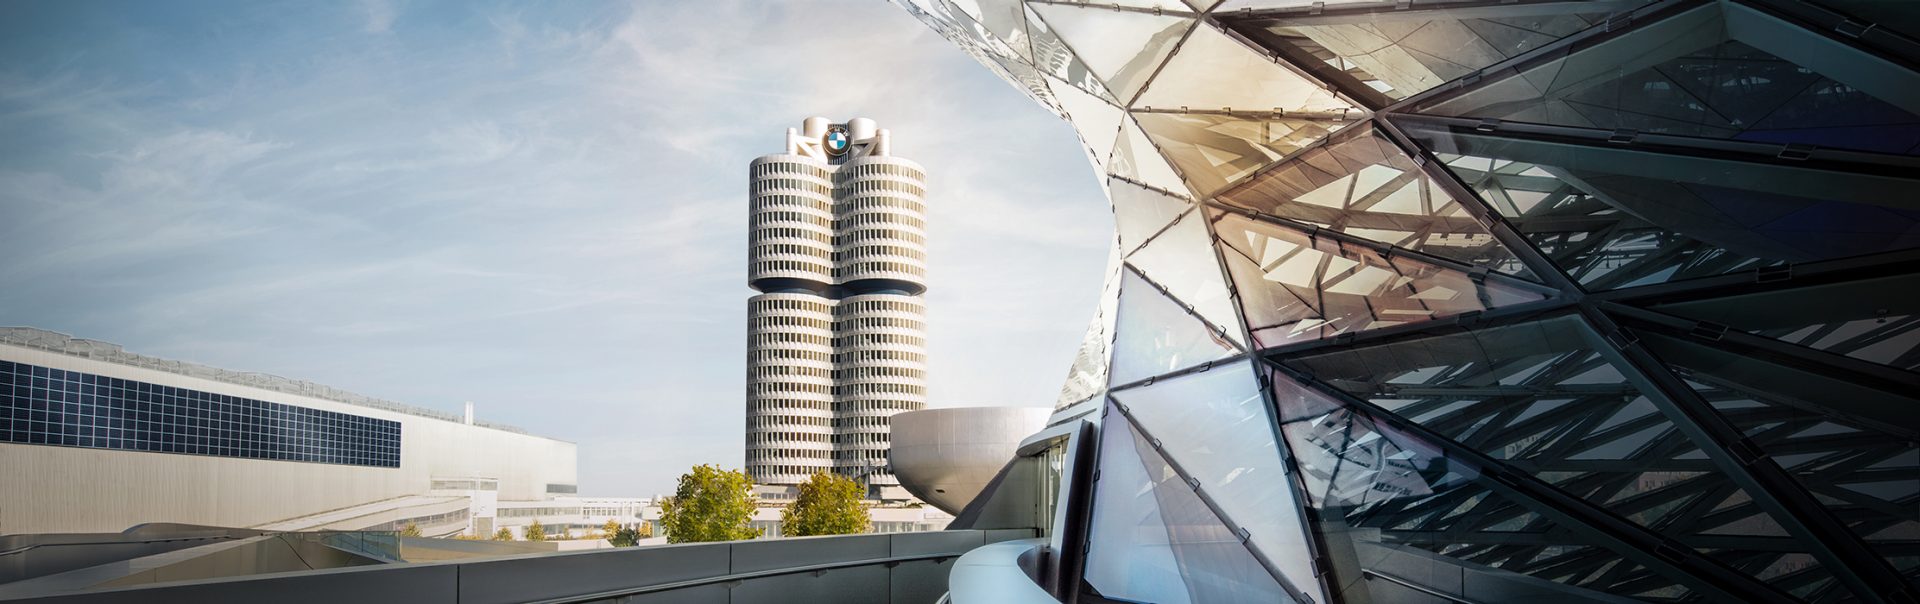 BMW Group Headquarters Building Munich